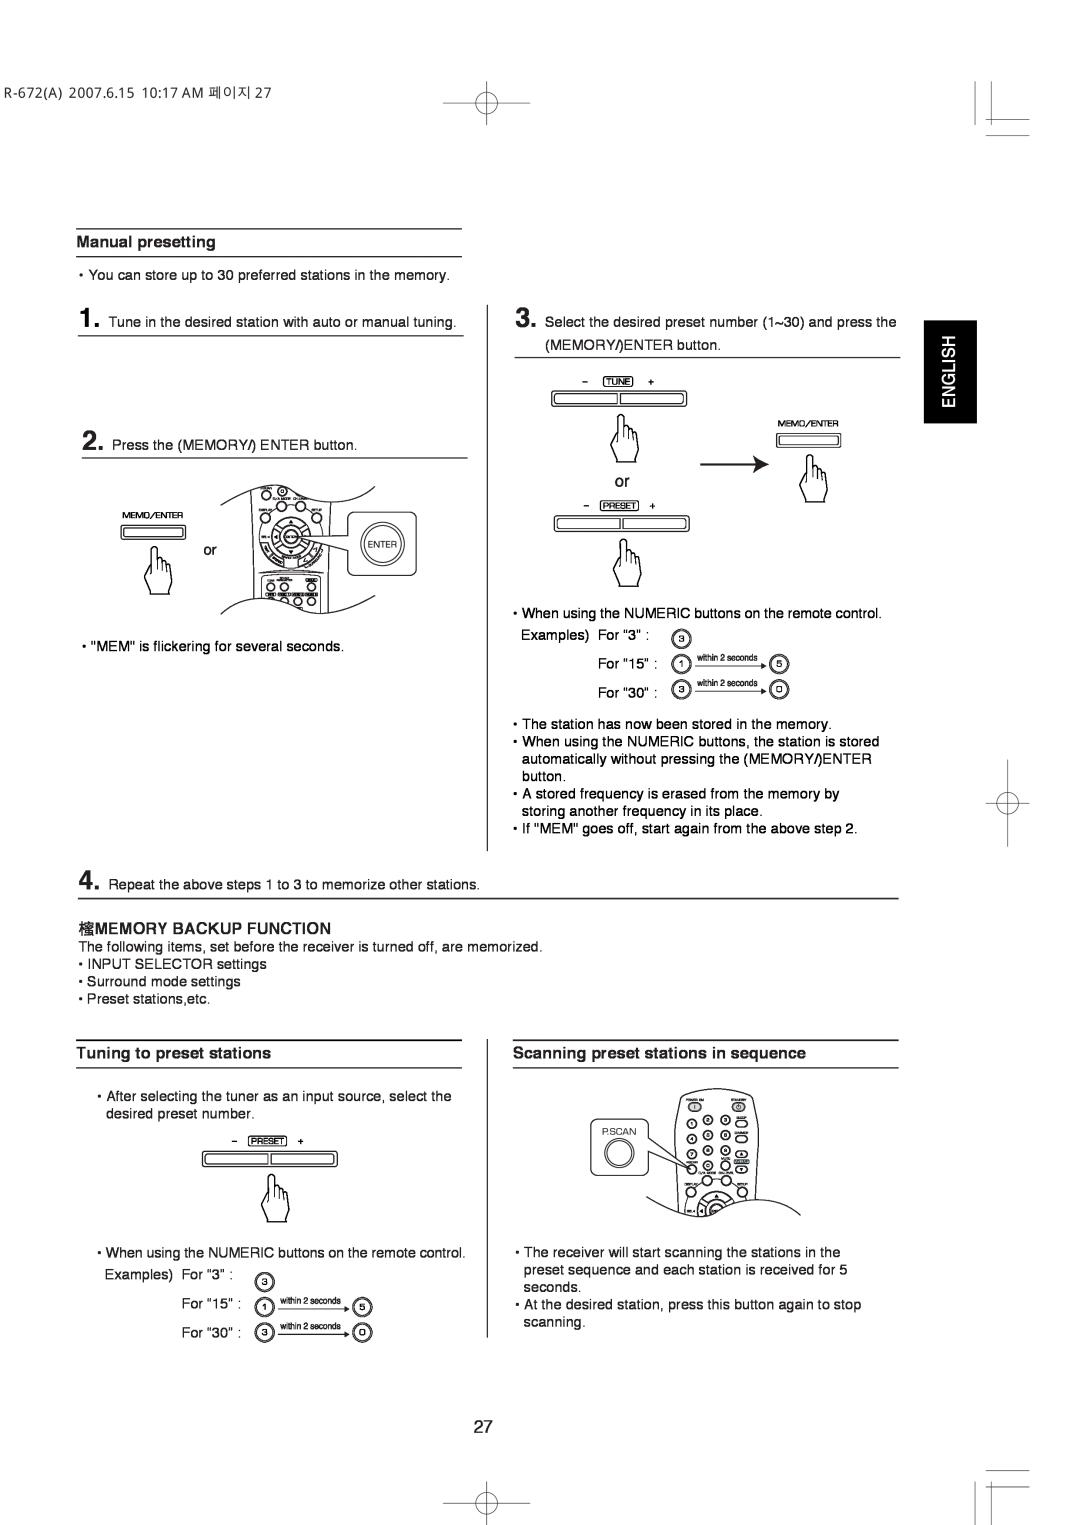 XM Satellite Radio R-672 manual Manual presetting, Memory Backup Function, Tuning to preset stations, English 